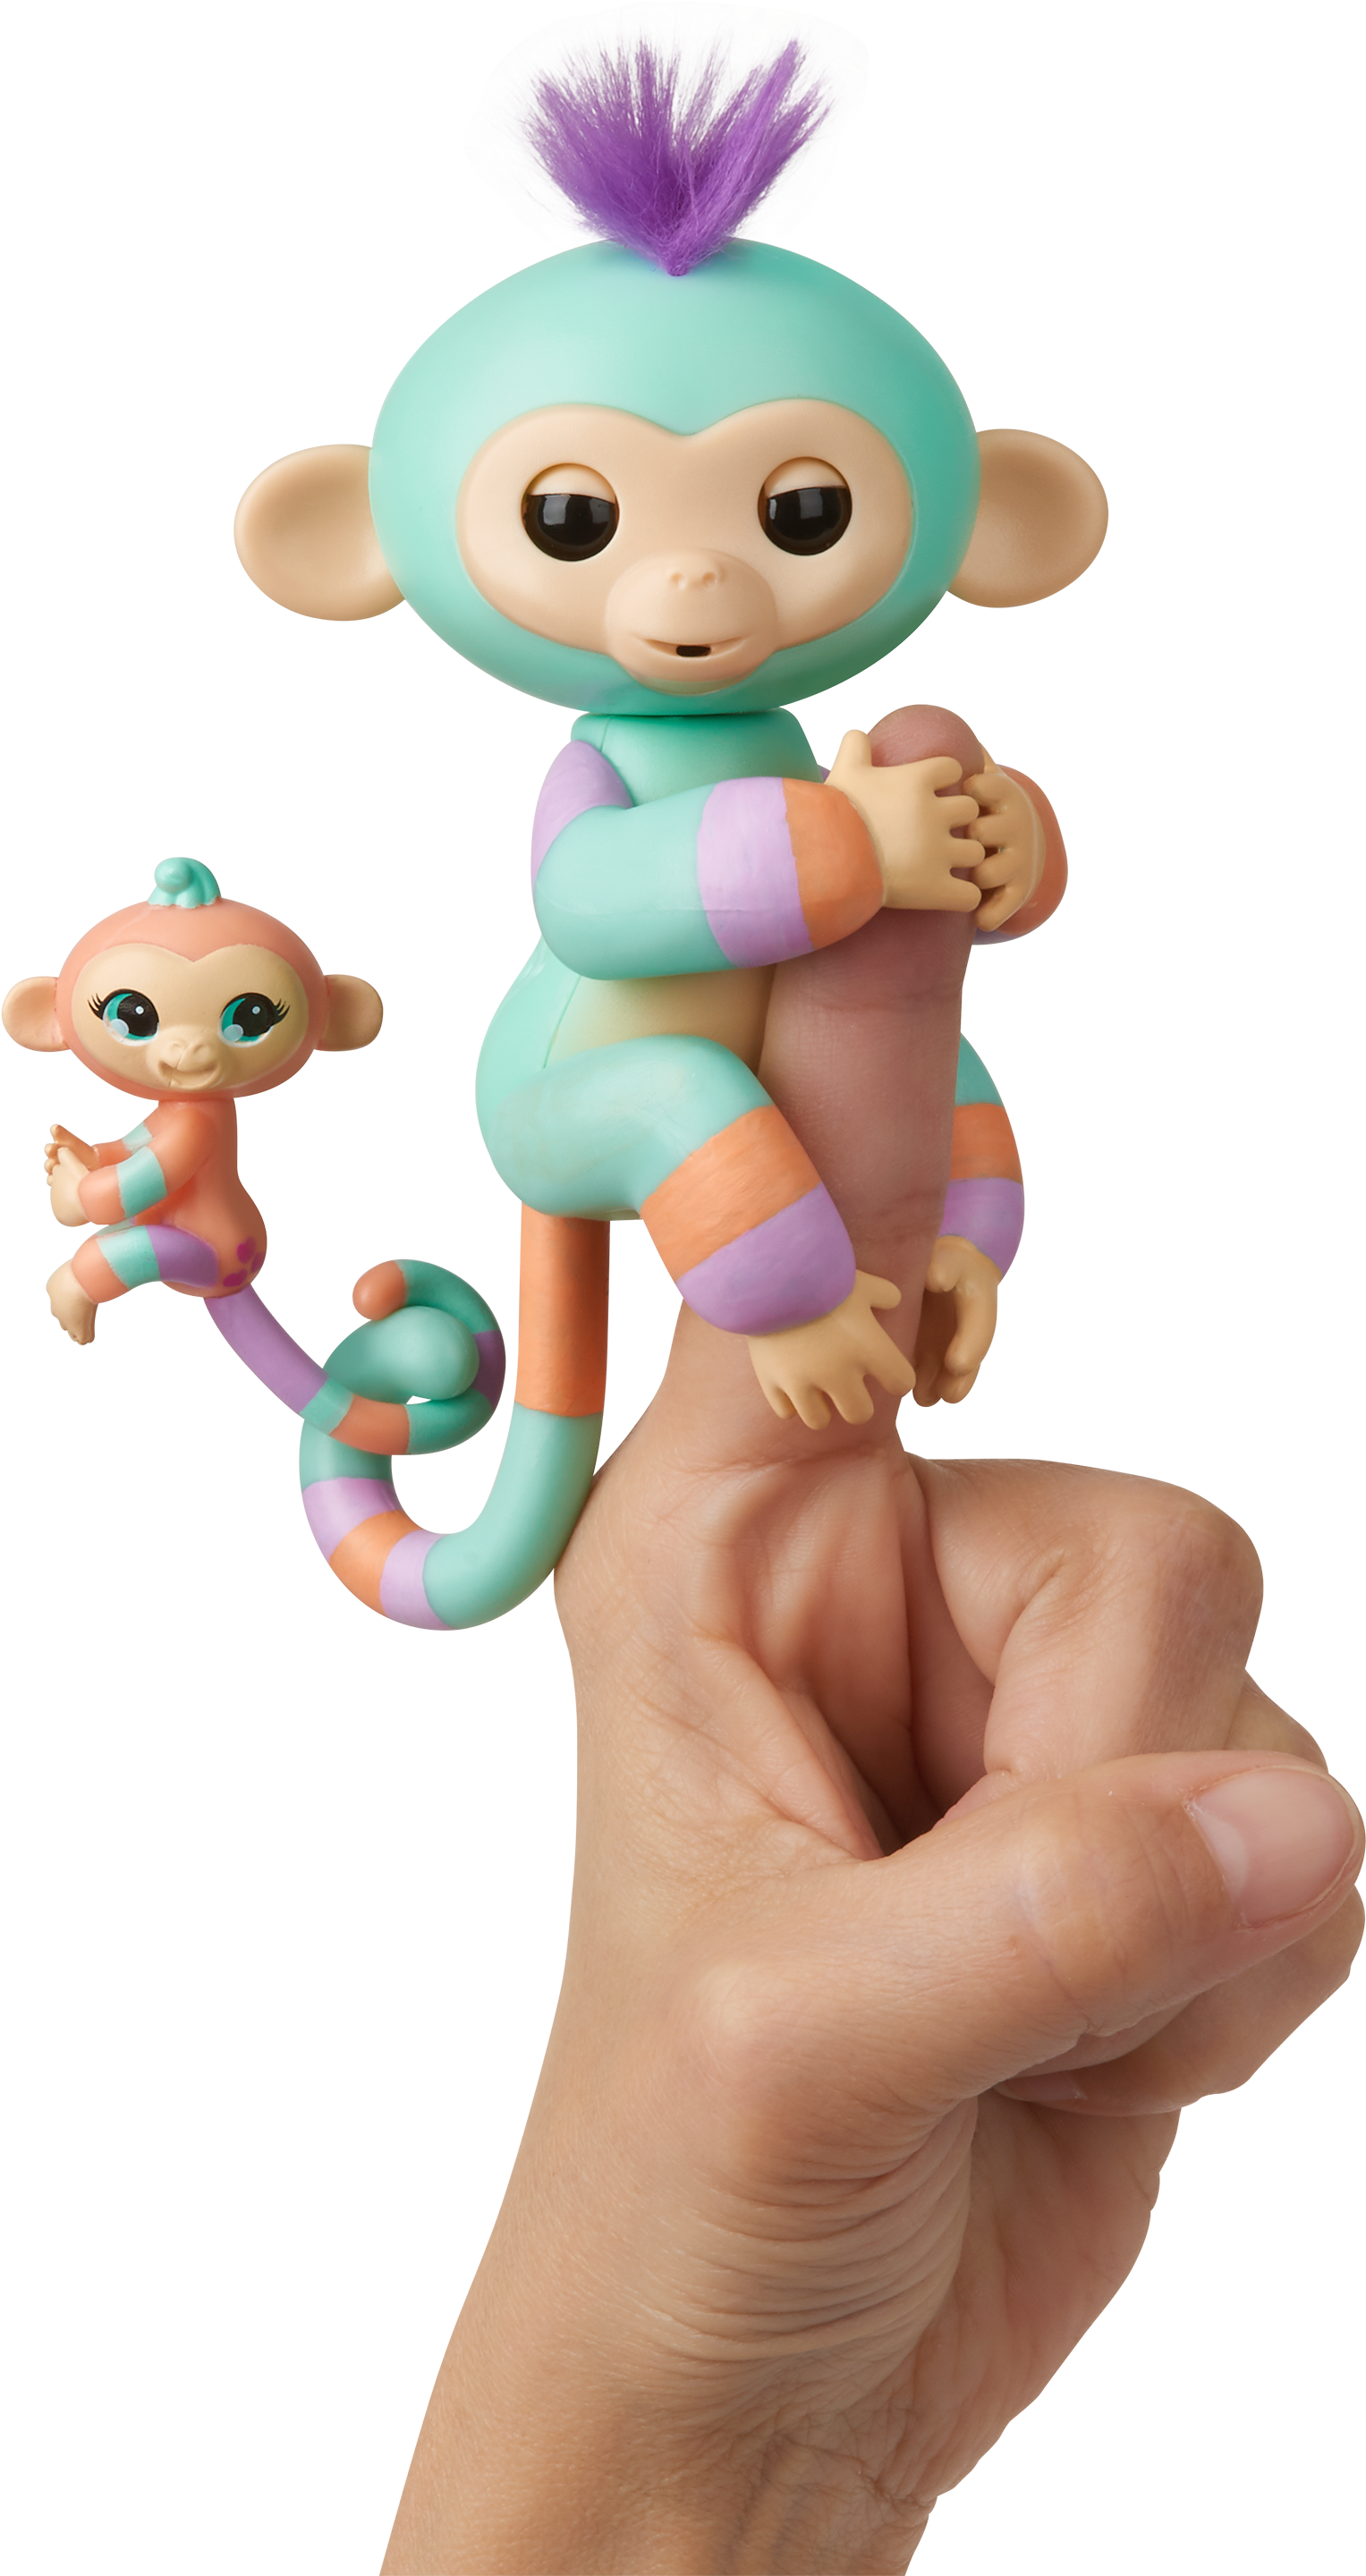 Colorful Toy Monkeyson Finger